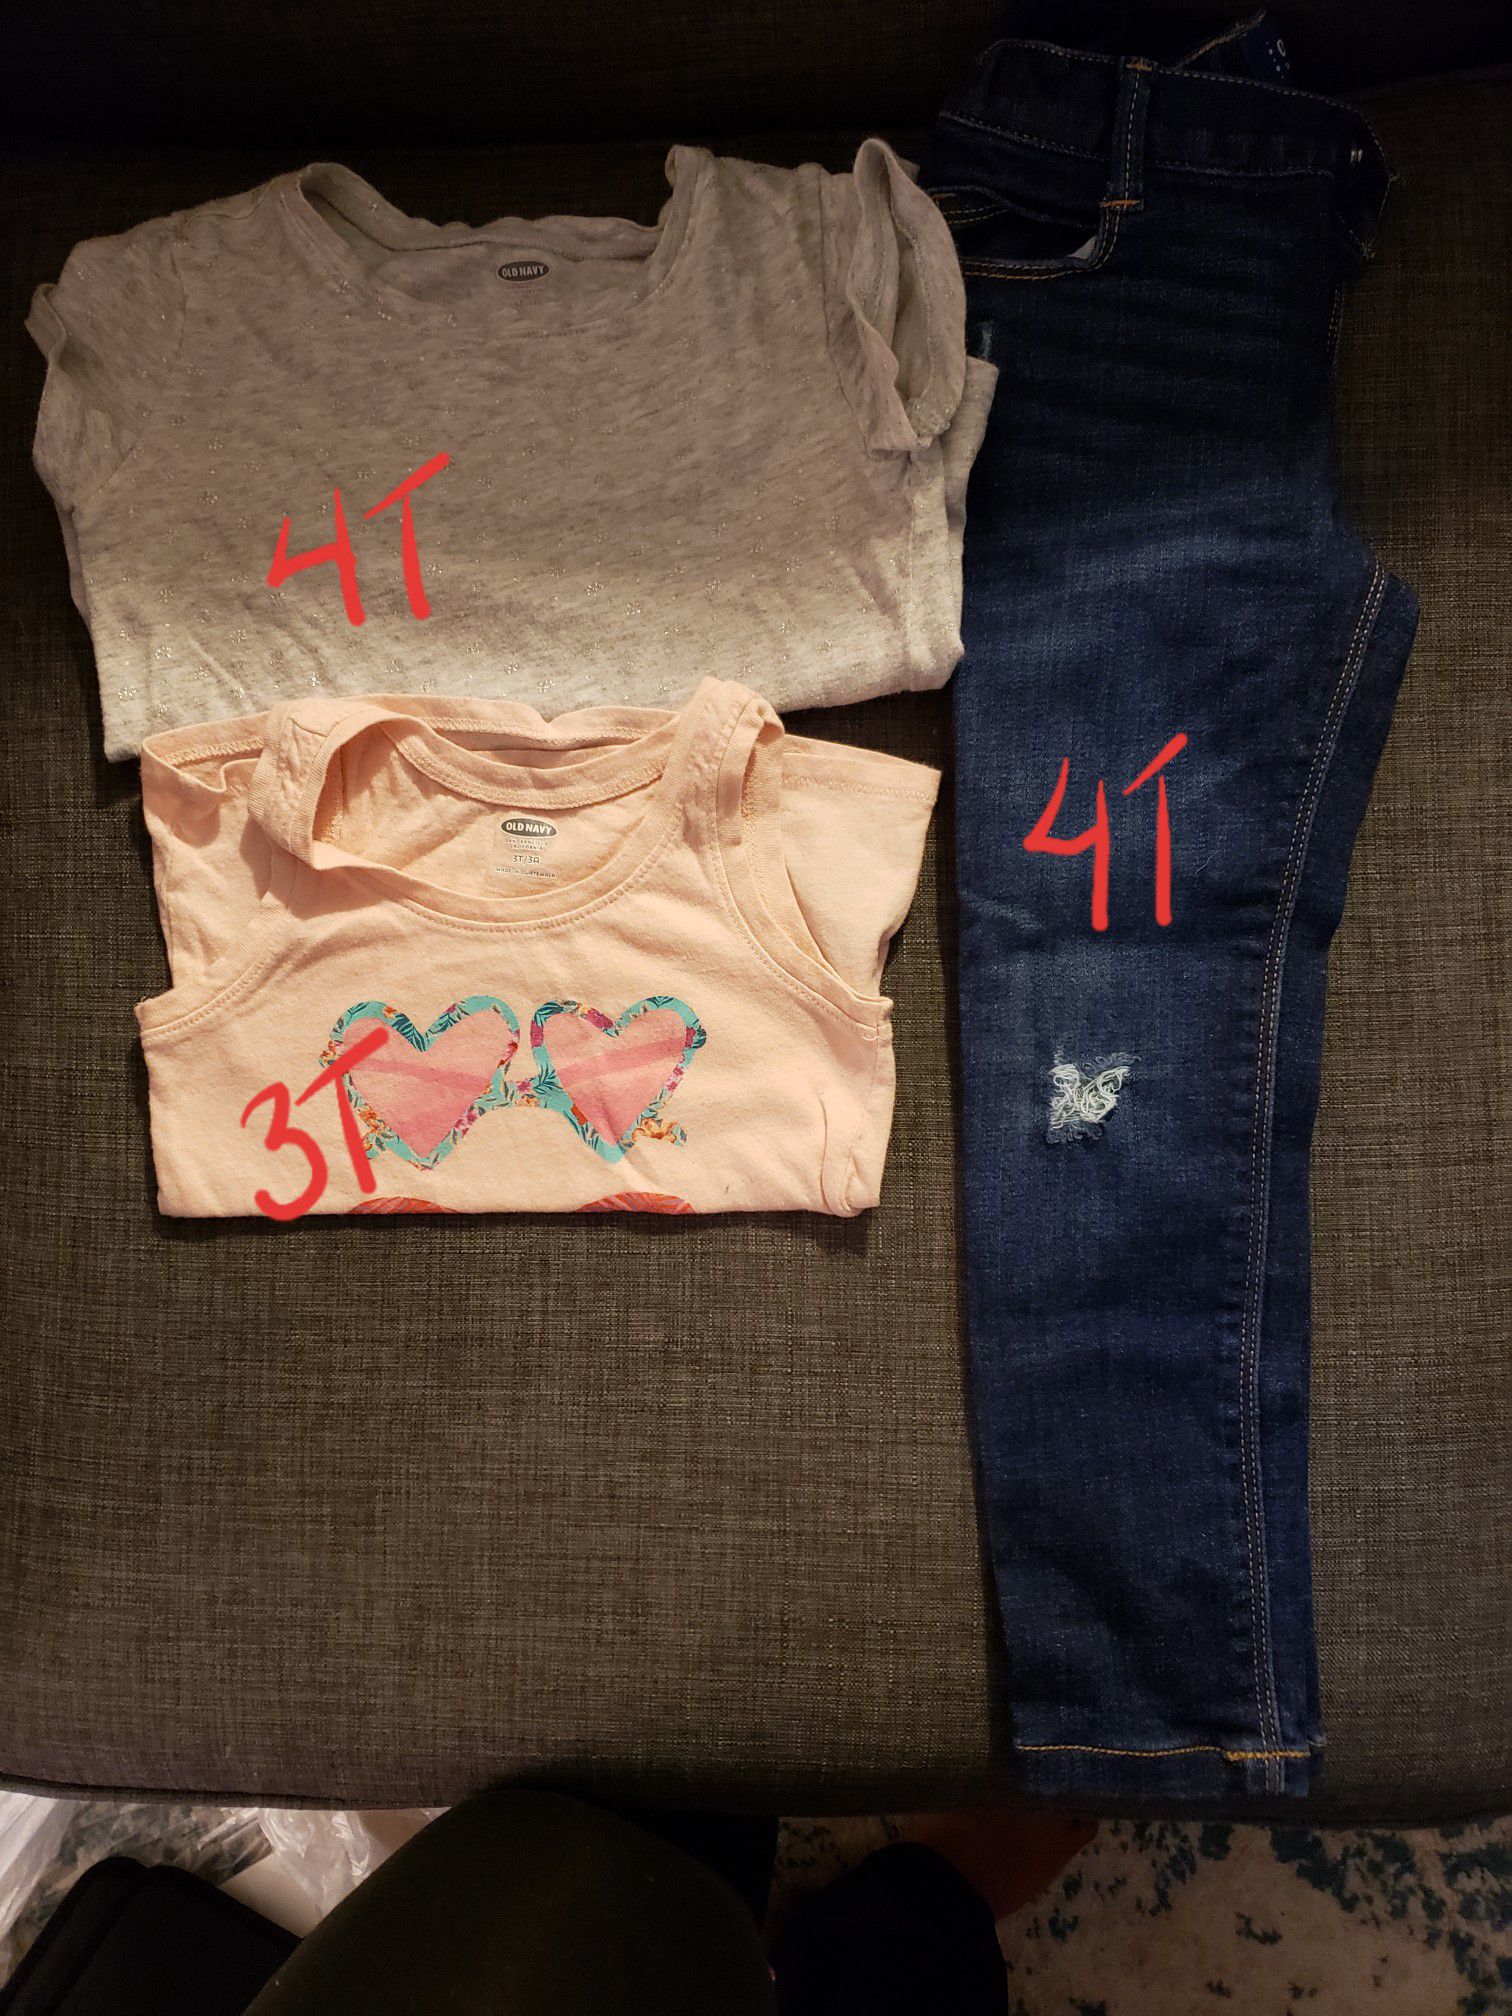 Girls clothing 4T $2 each